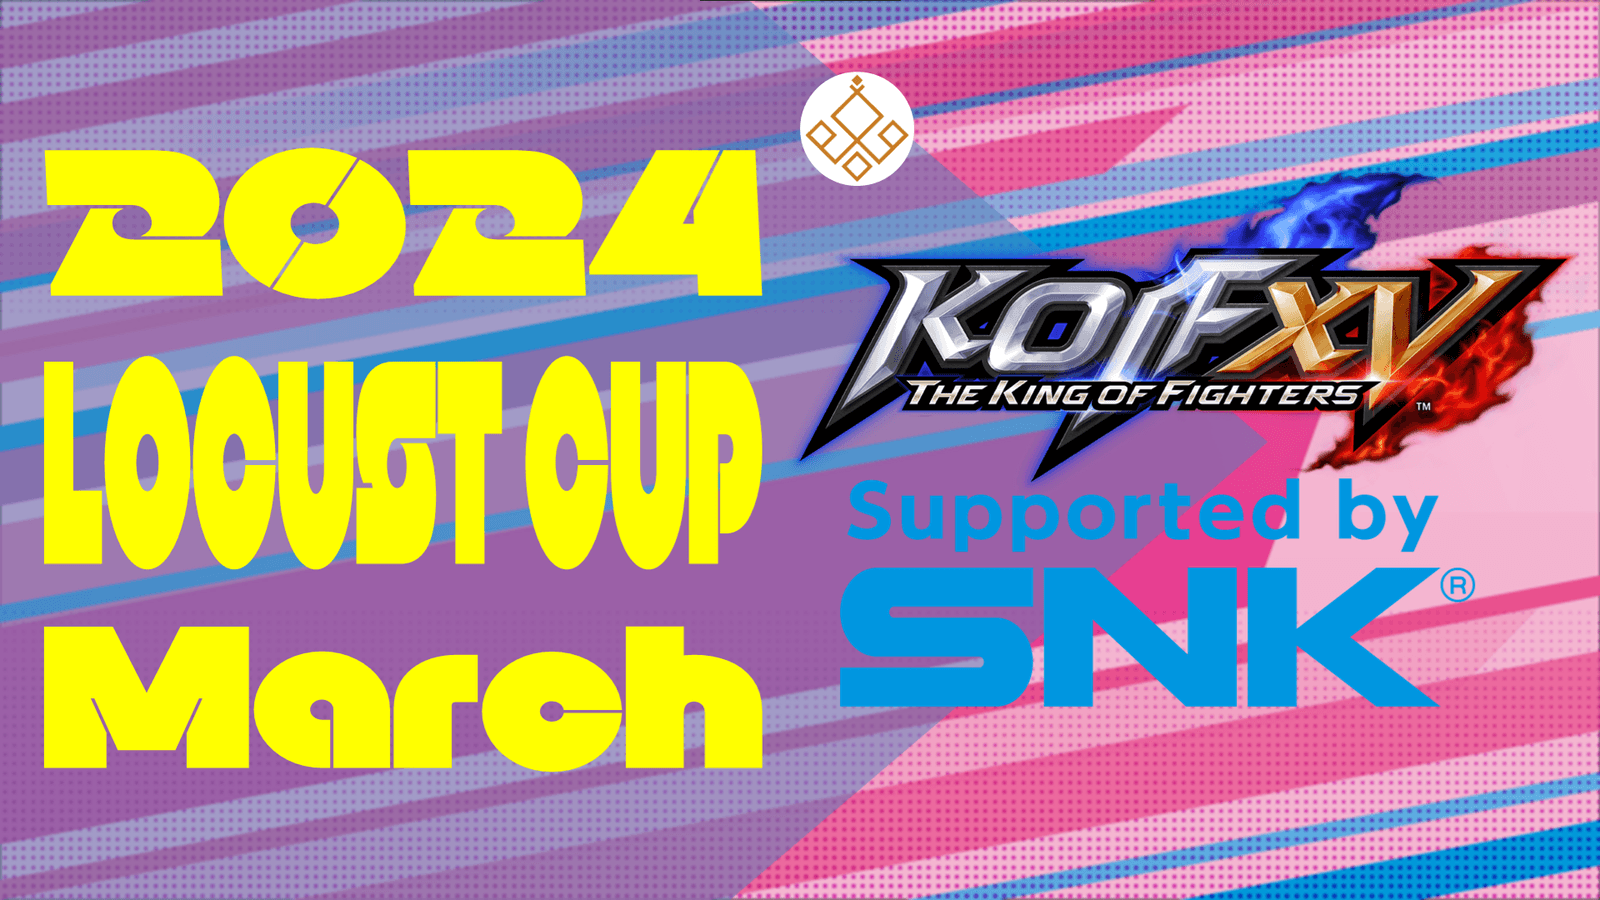 Locust杯 -KOF15 3月期-【2024】 feature image